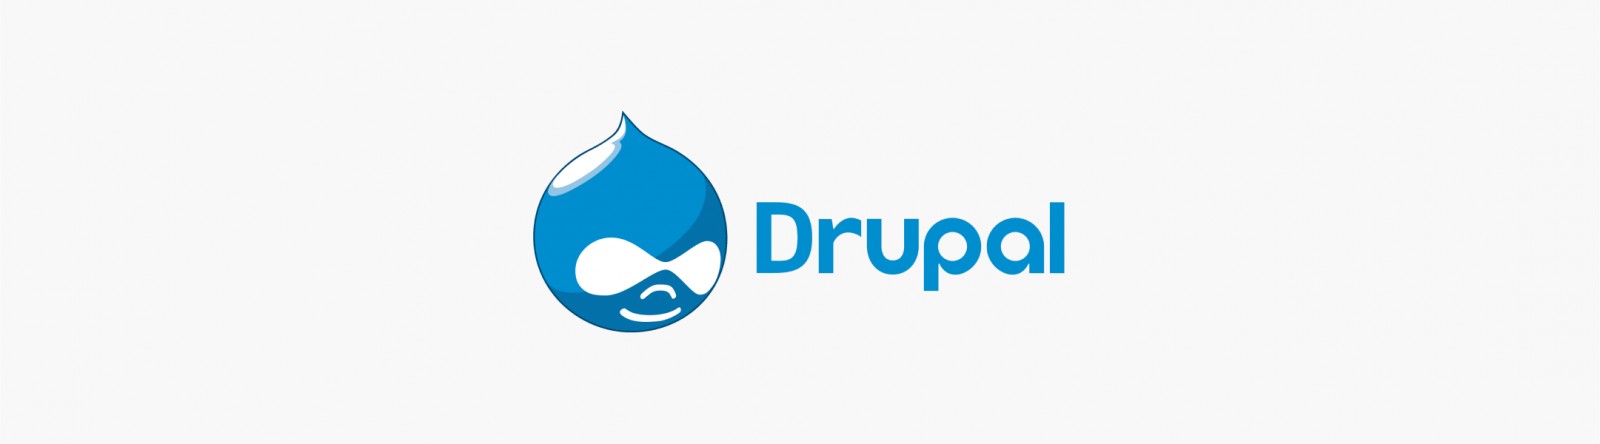 Drupal website development